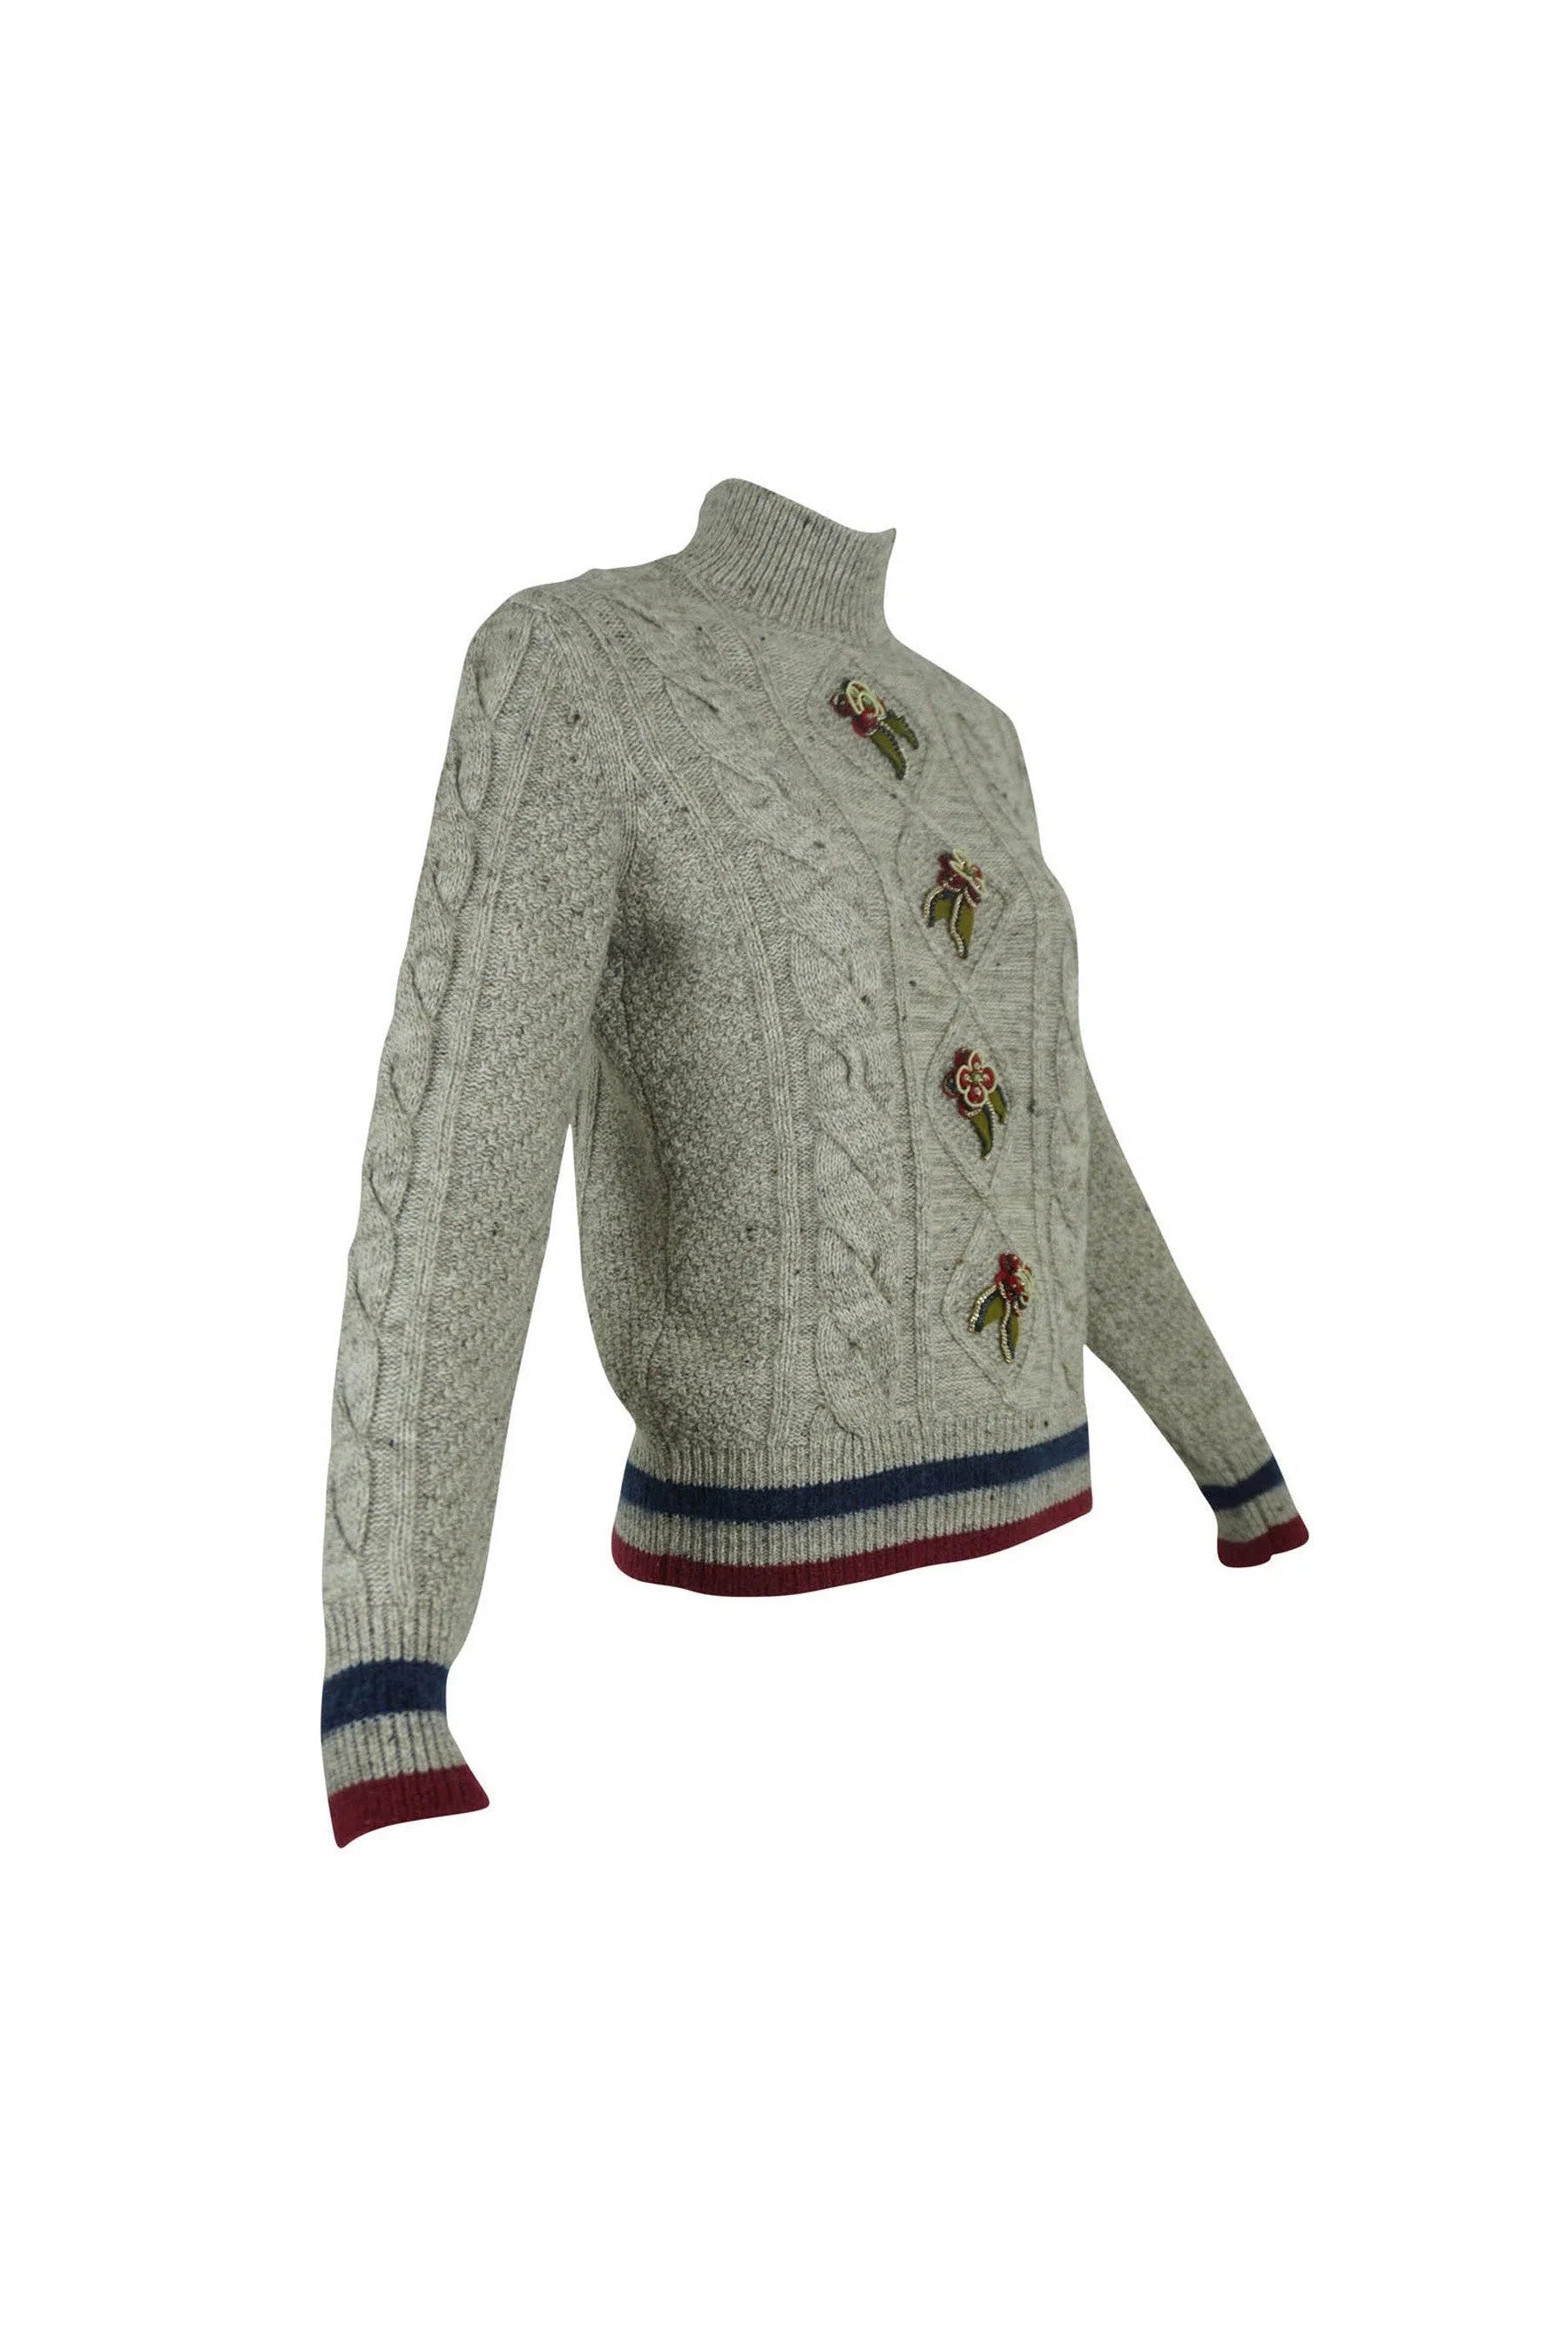 Chanel Cable Knit Sweater Salzburg Metiers d'Art 2015 Sz 36/6